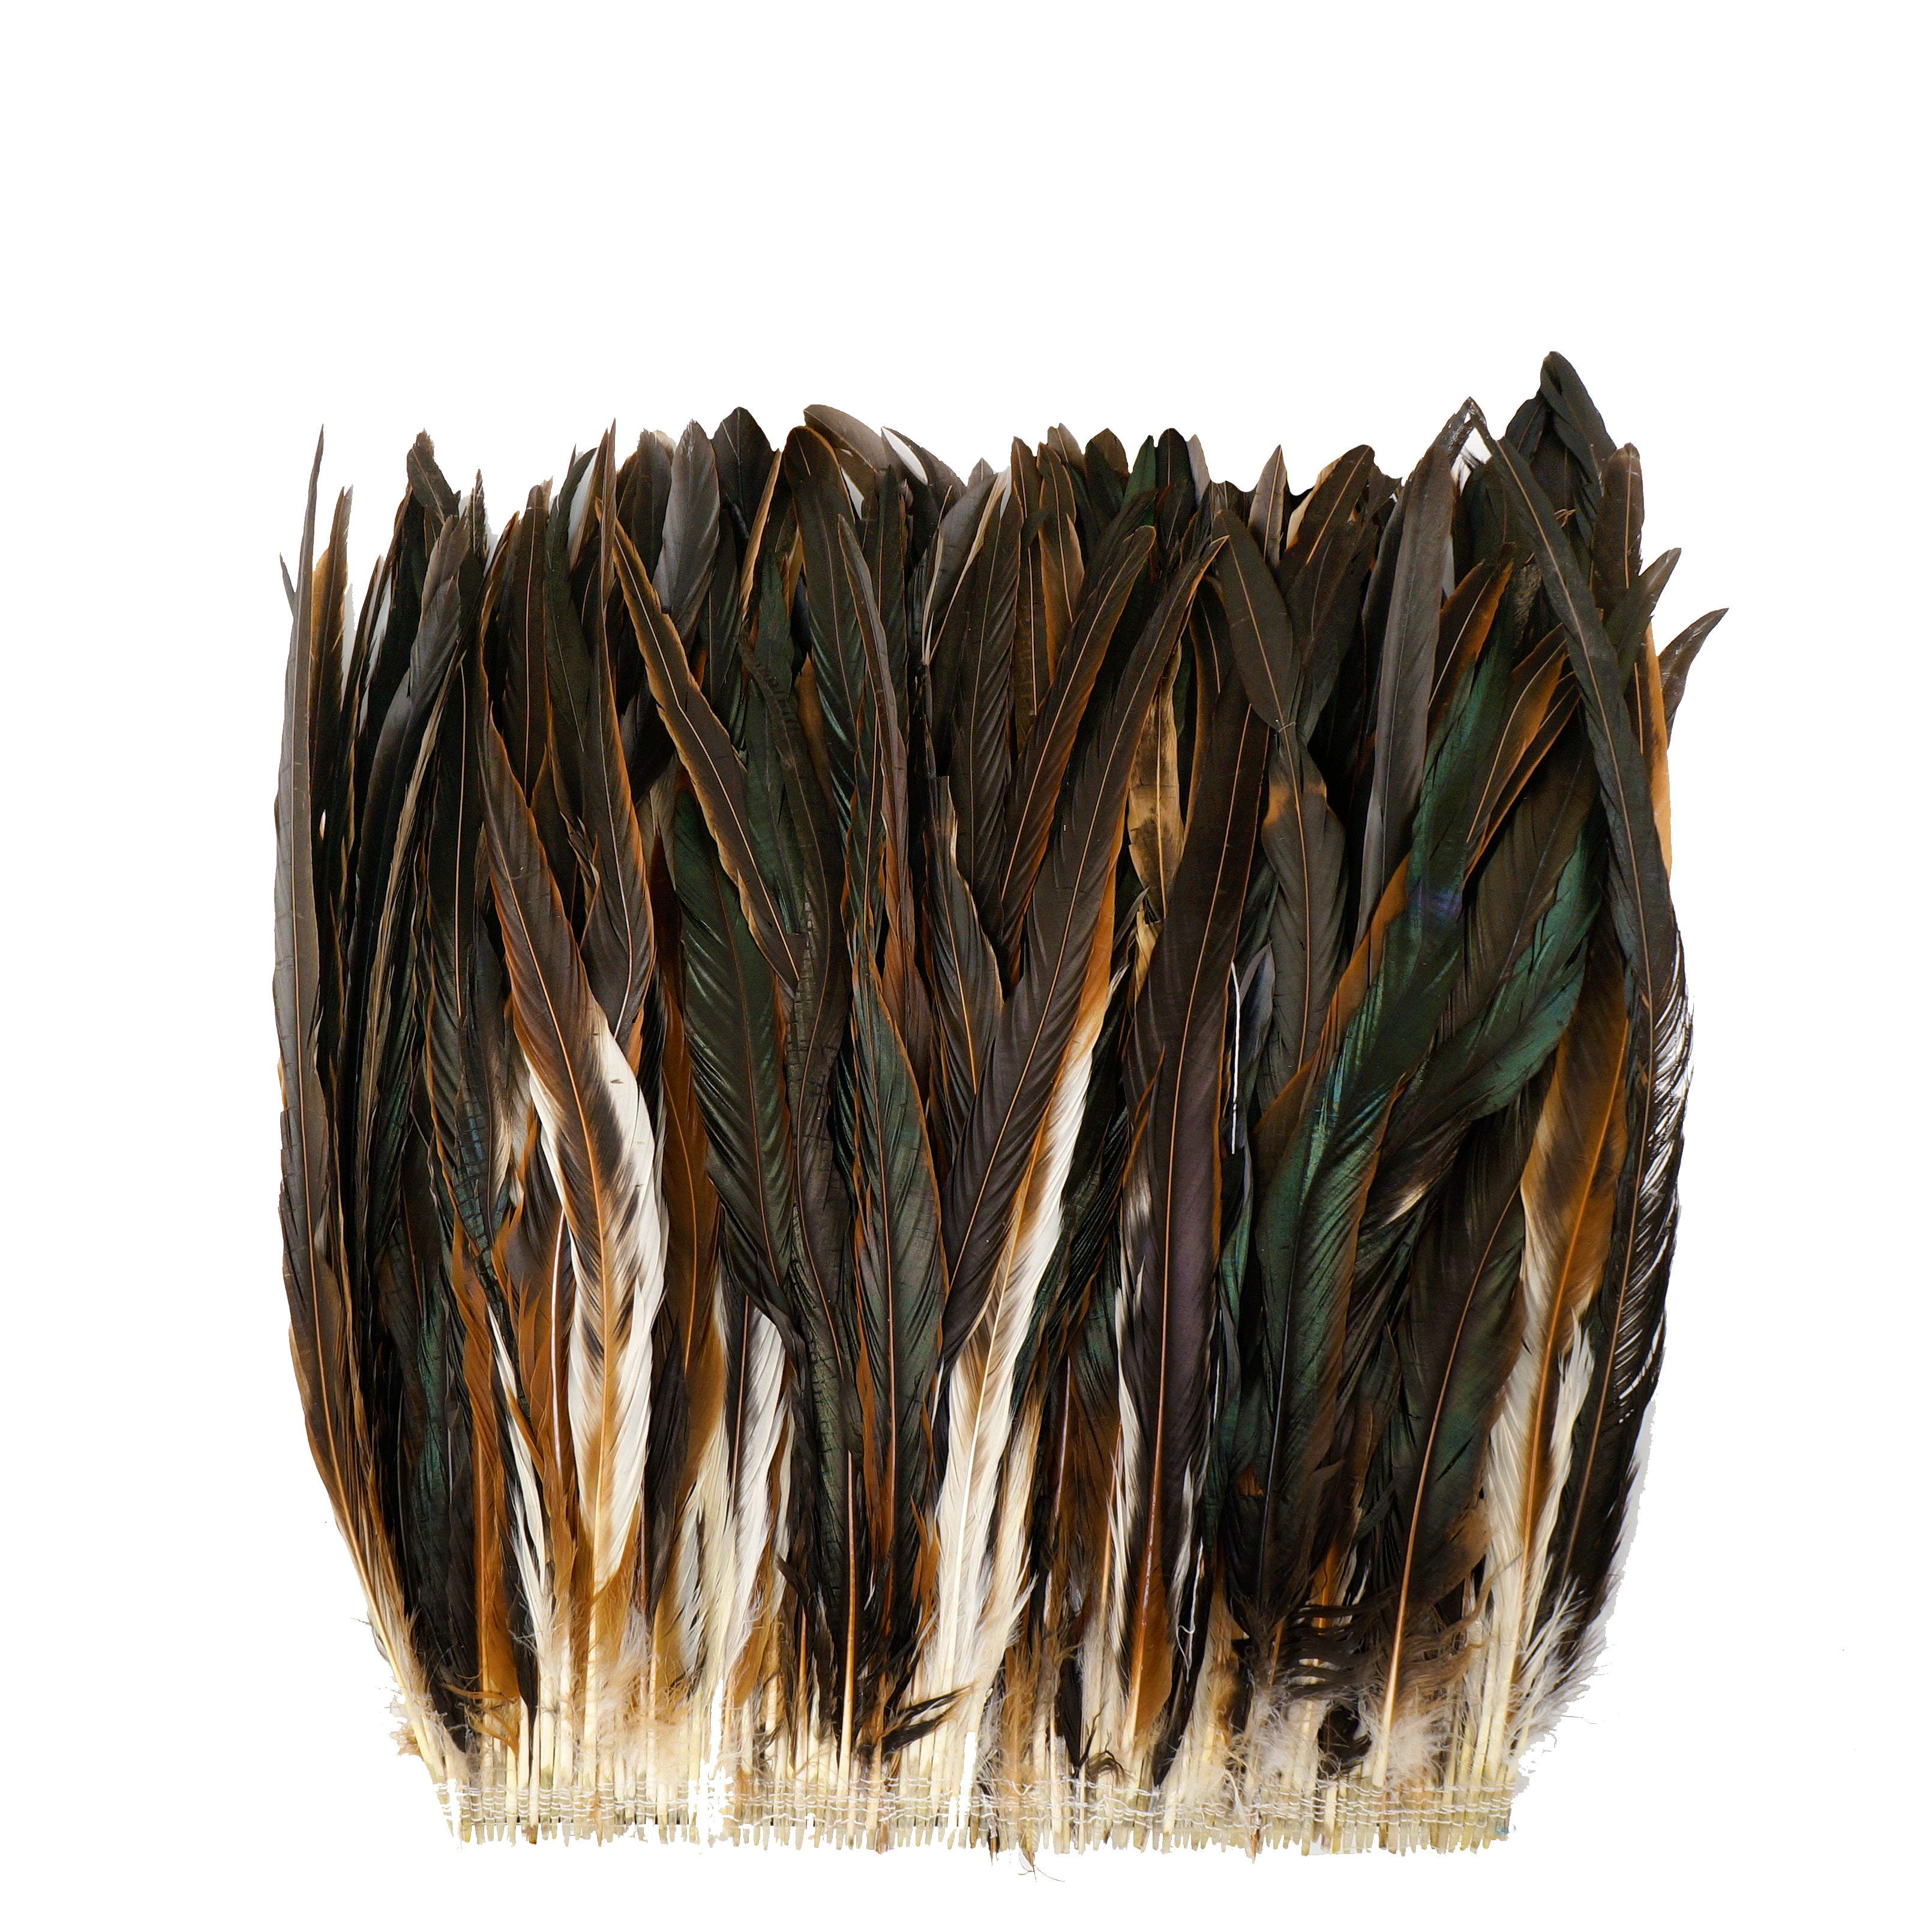 1/4 lb - Natural Silver Pheasant Plumage Wholesale Feathers (Bulk)